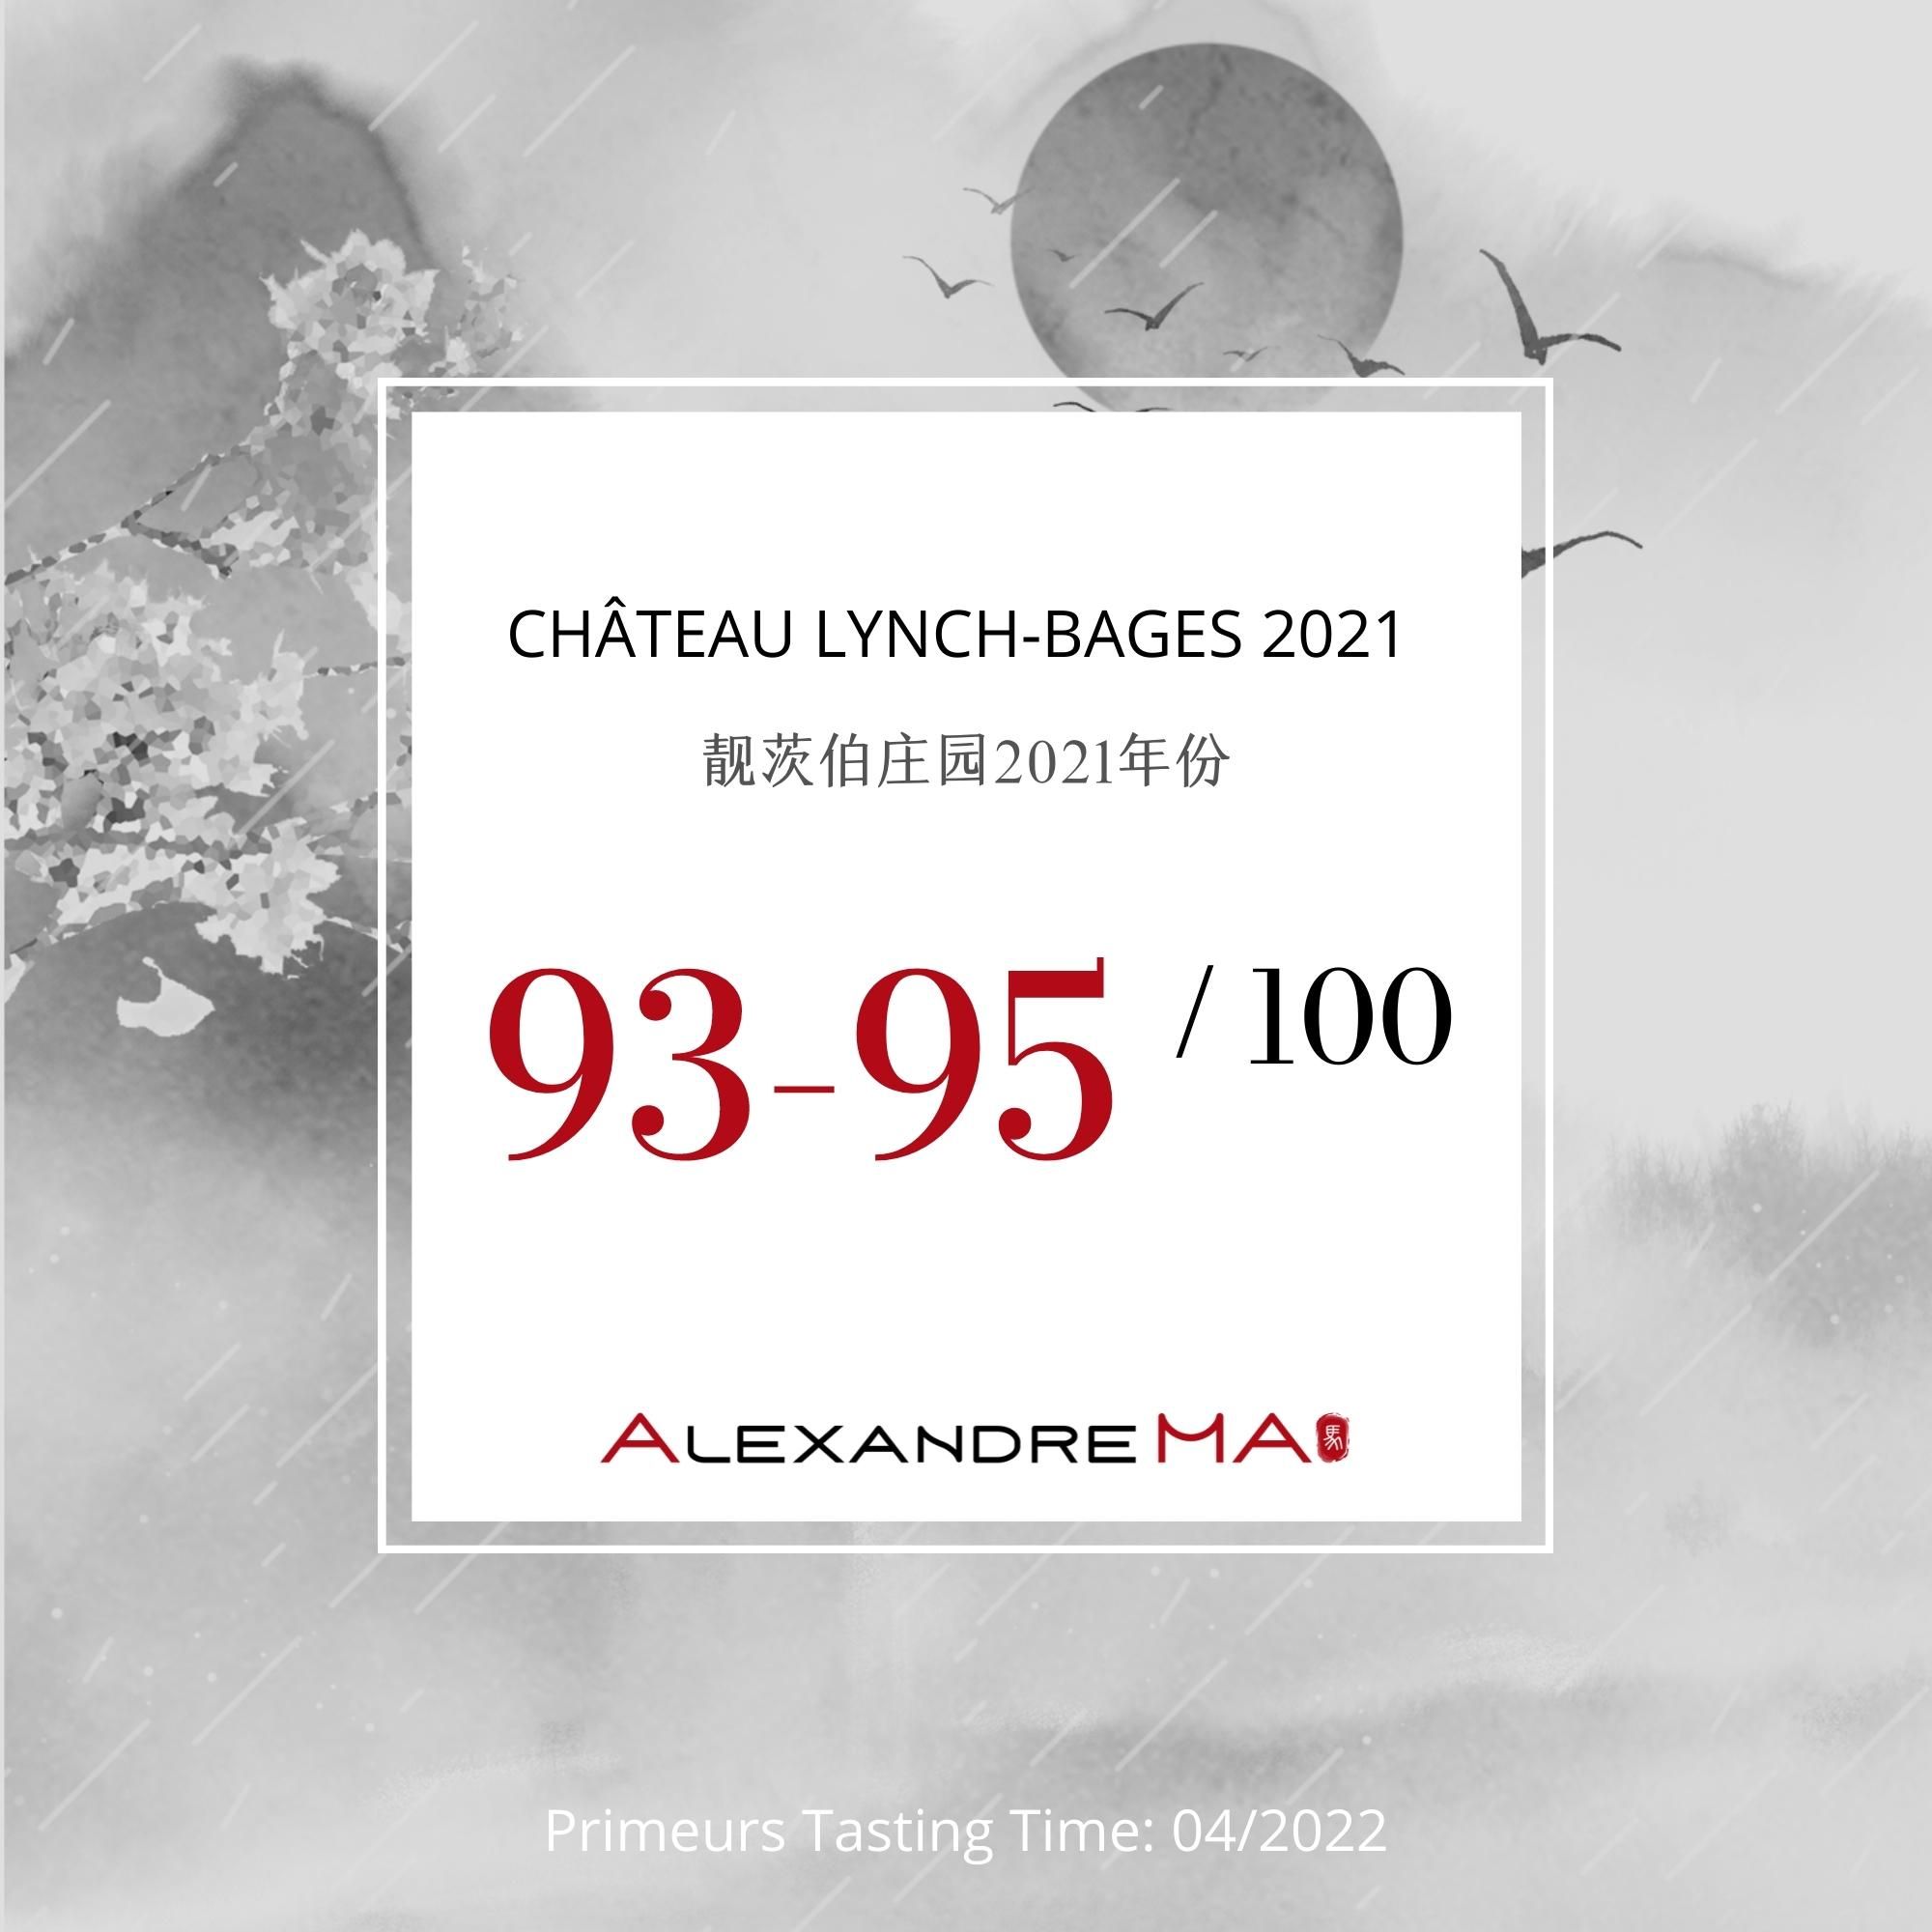 Château Lynch-Bages 2021 - Alexandre MA